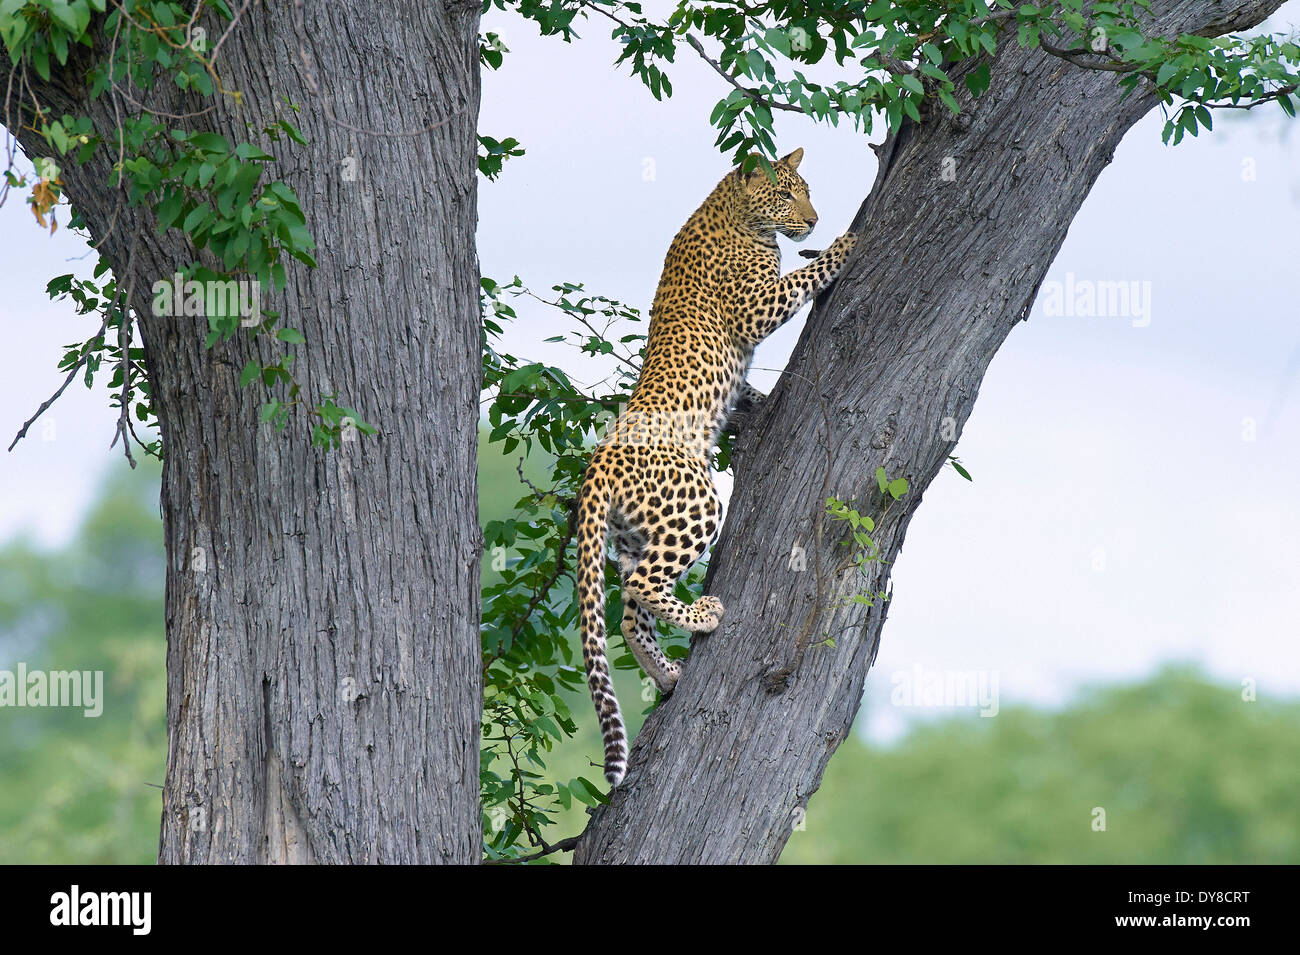 Botswana, África, el leopardo, Moremi, animal, árbol, Foto de stock